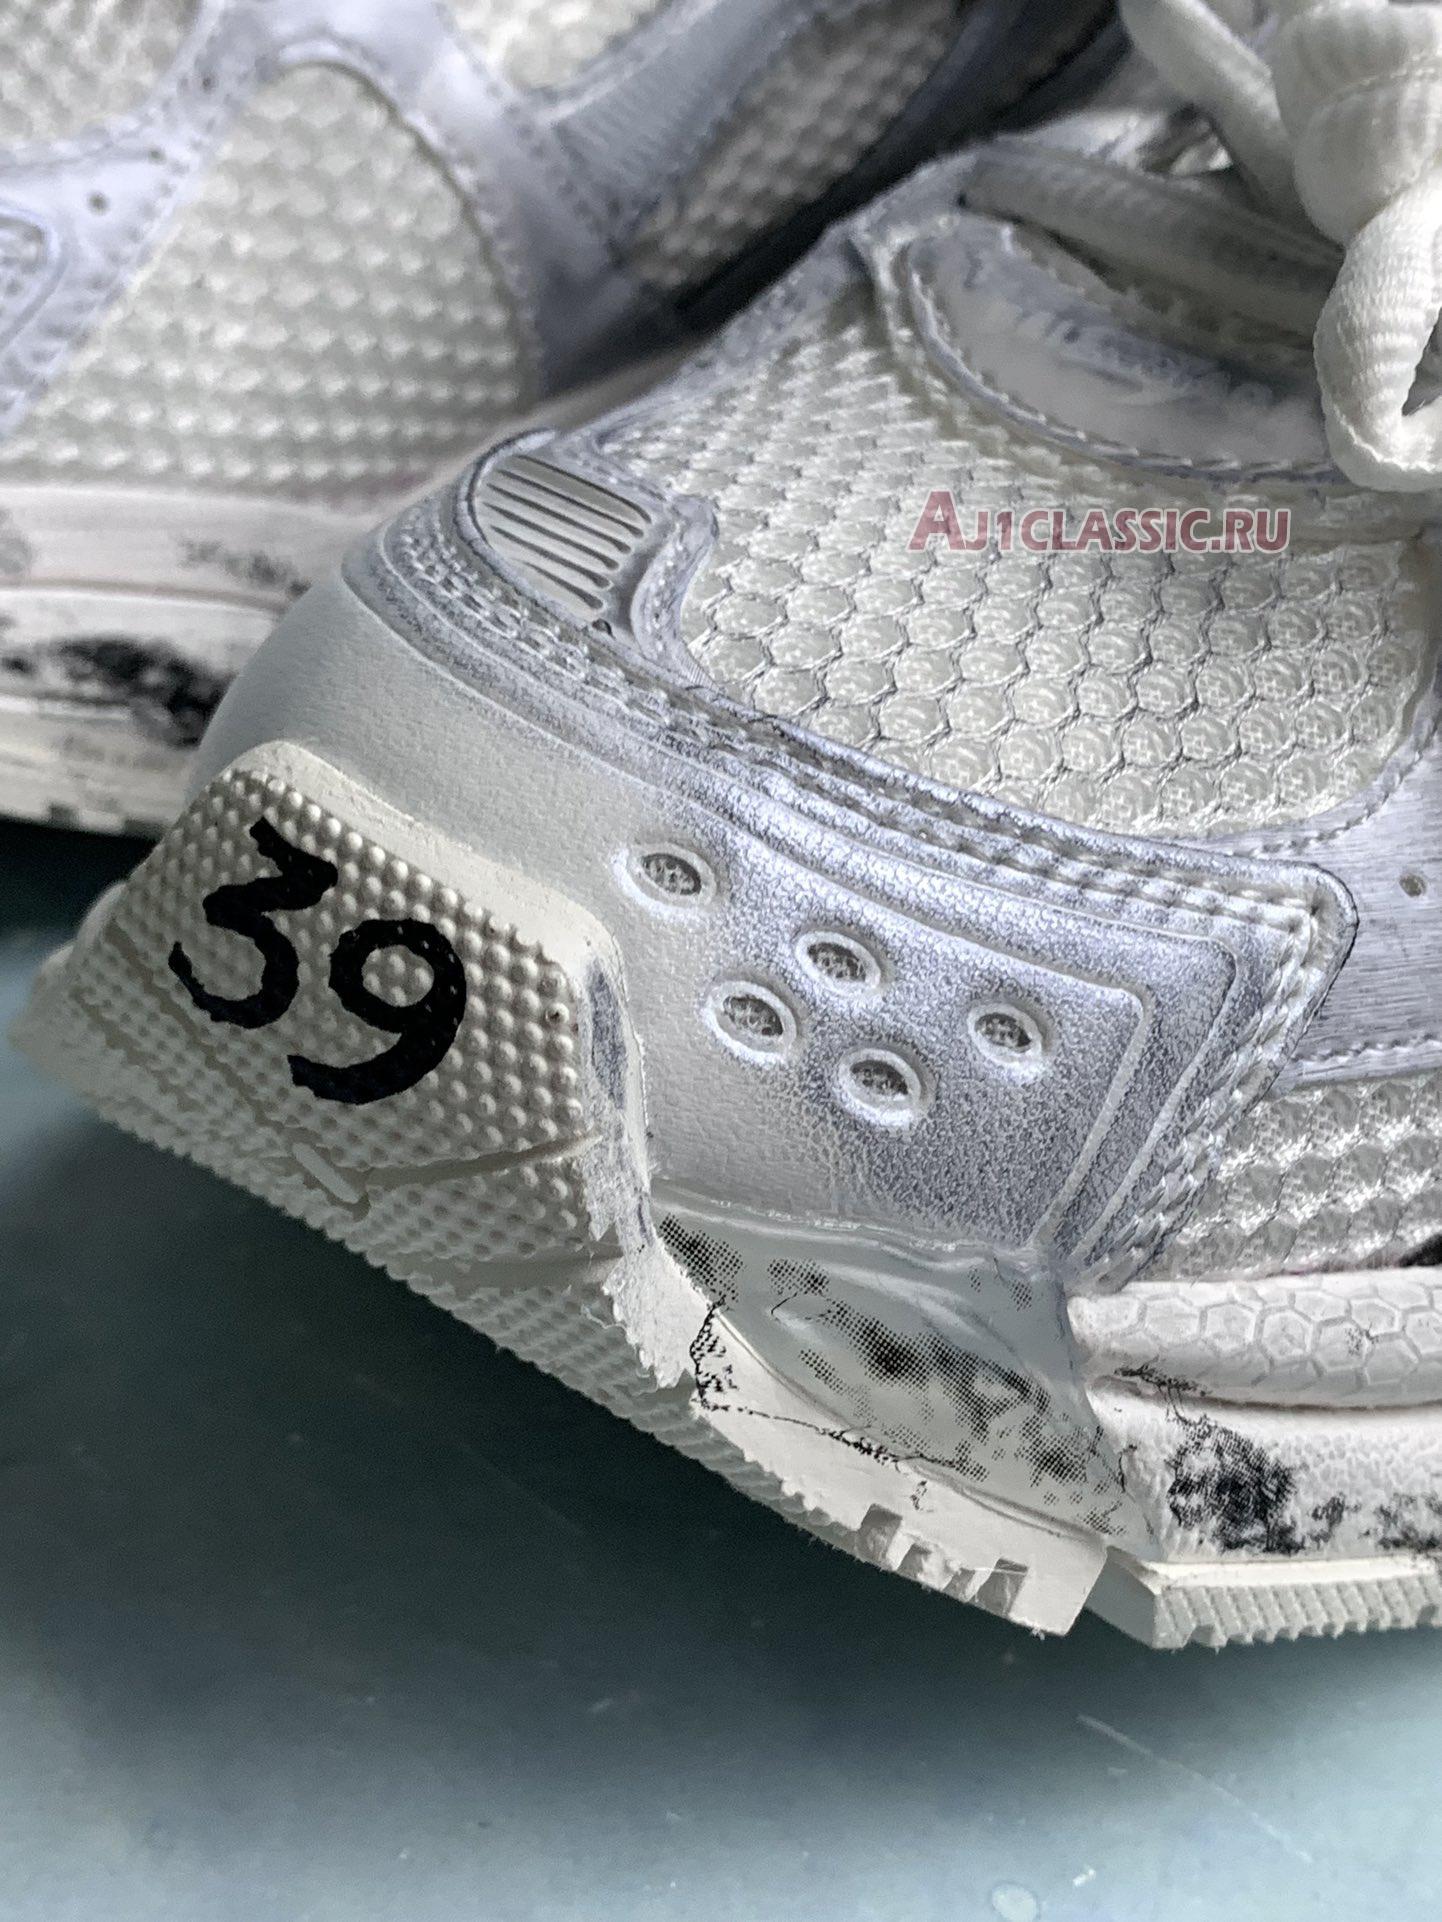 Balenciaga Runner Sneaker "White Gey Silver" 677403 W3RBL 8100-1